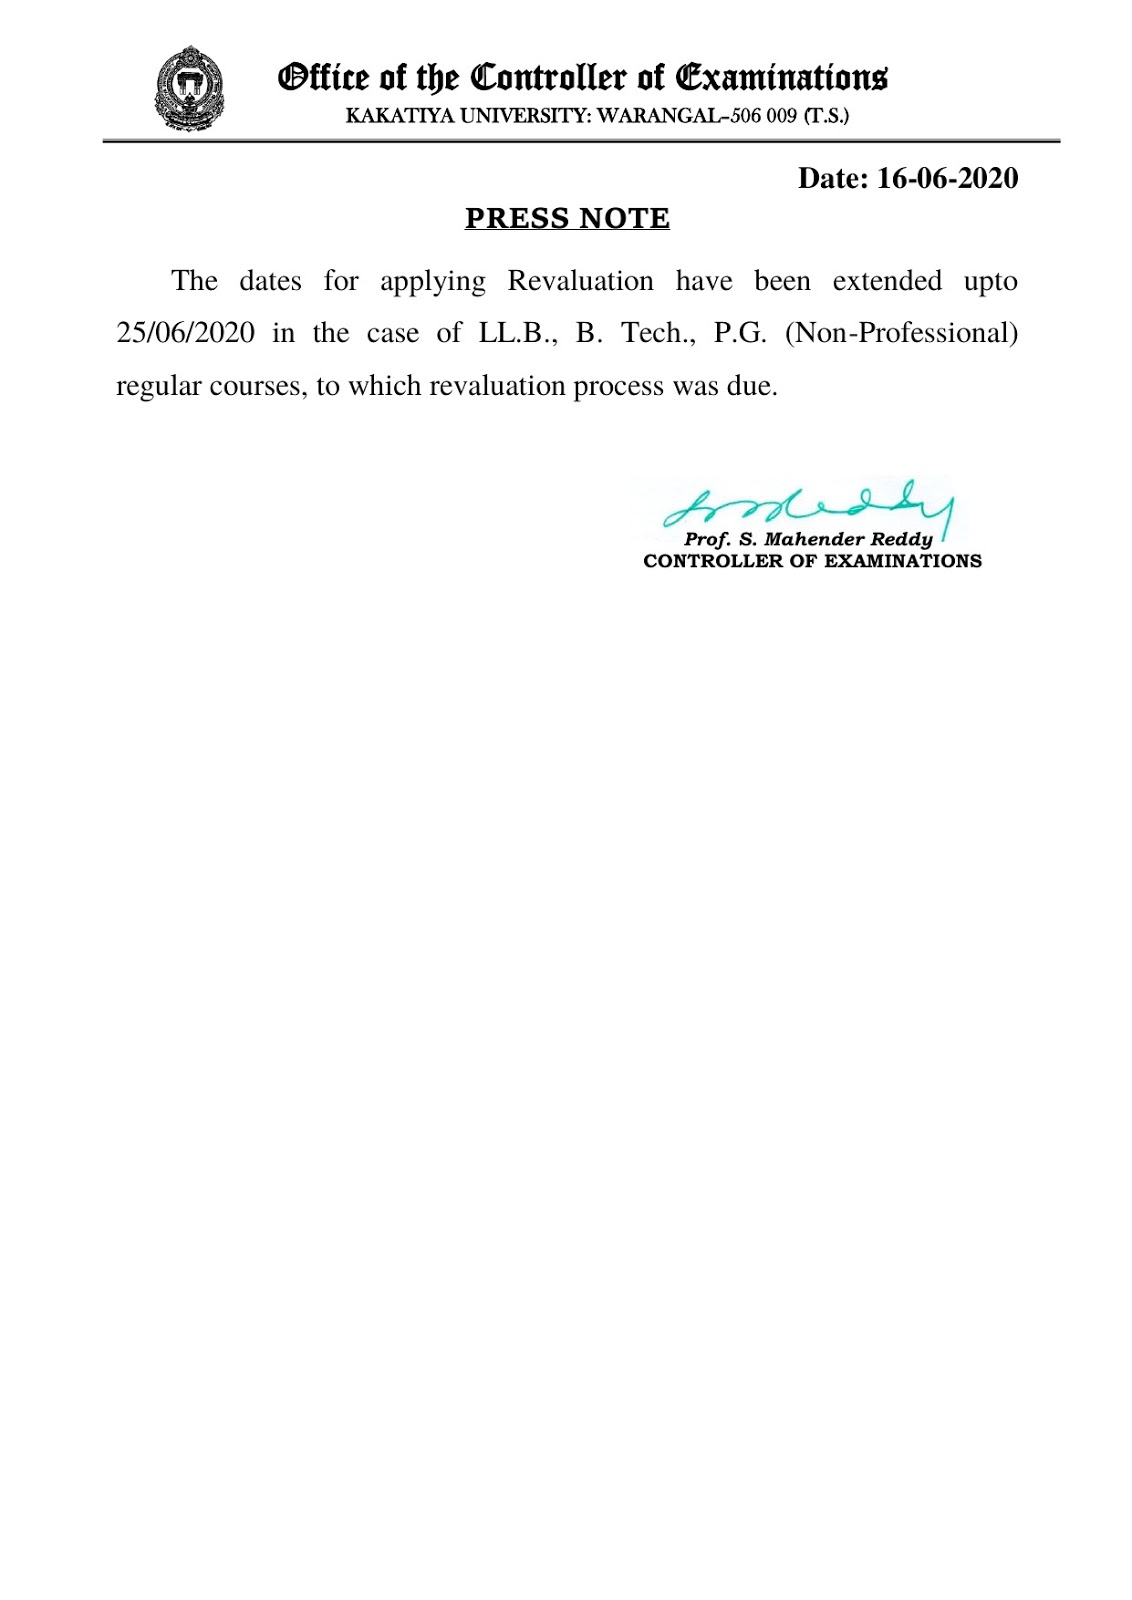 kakatiya university llb, btech & pg june 2020 rv apply extended date notification